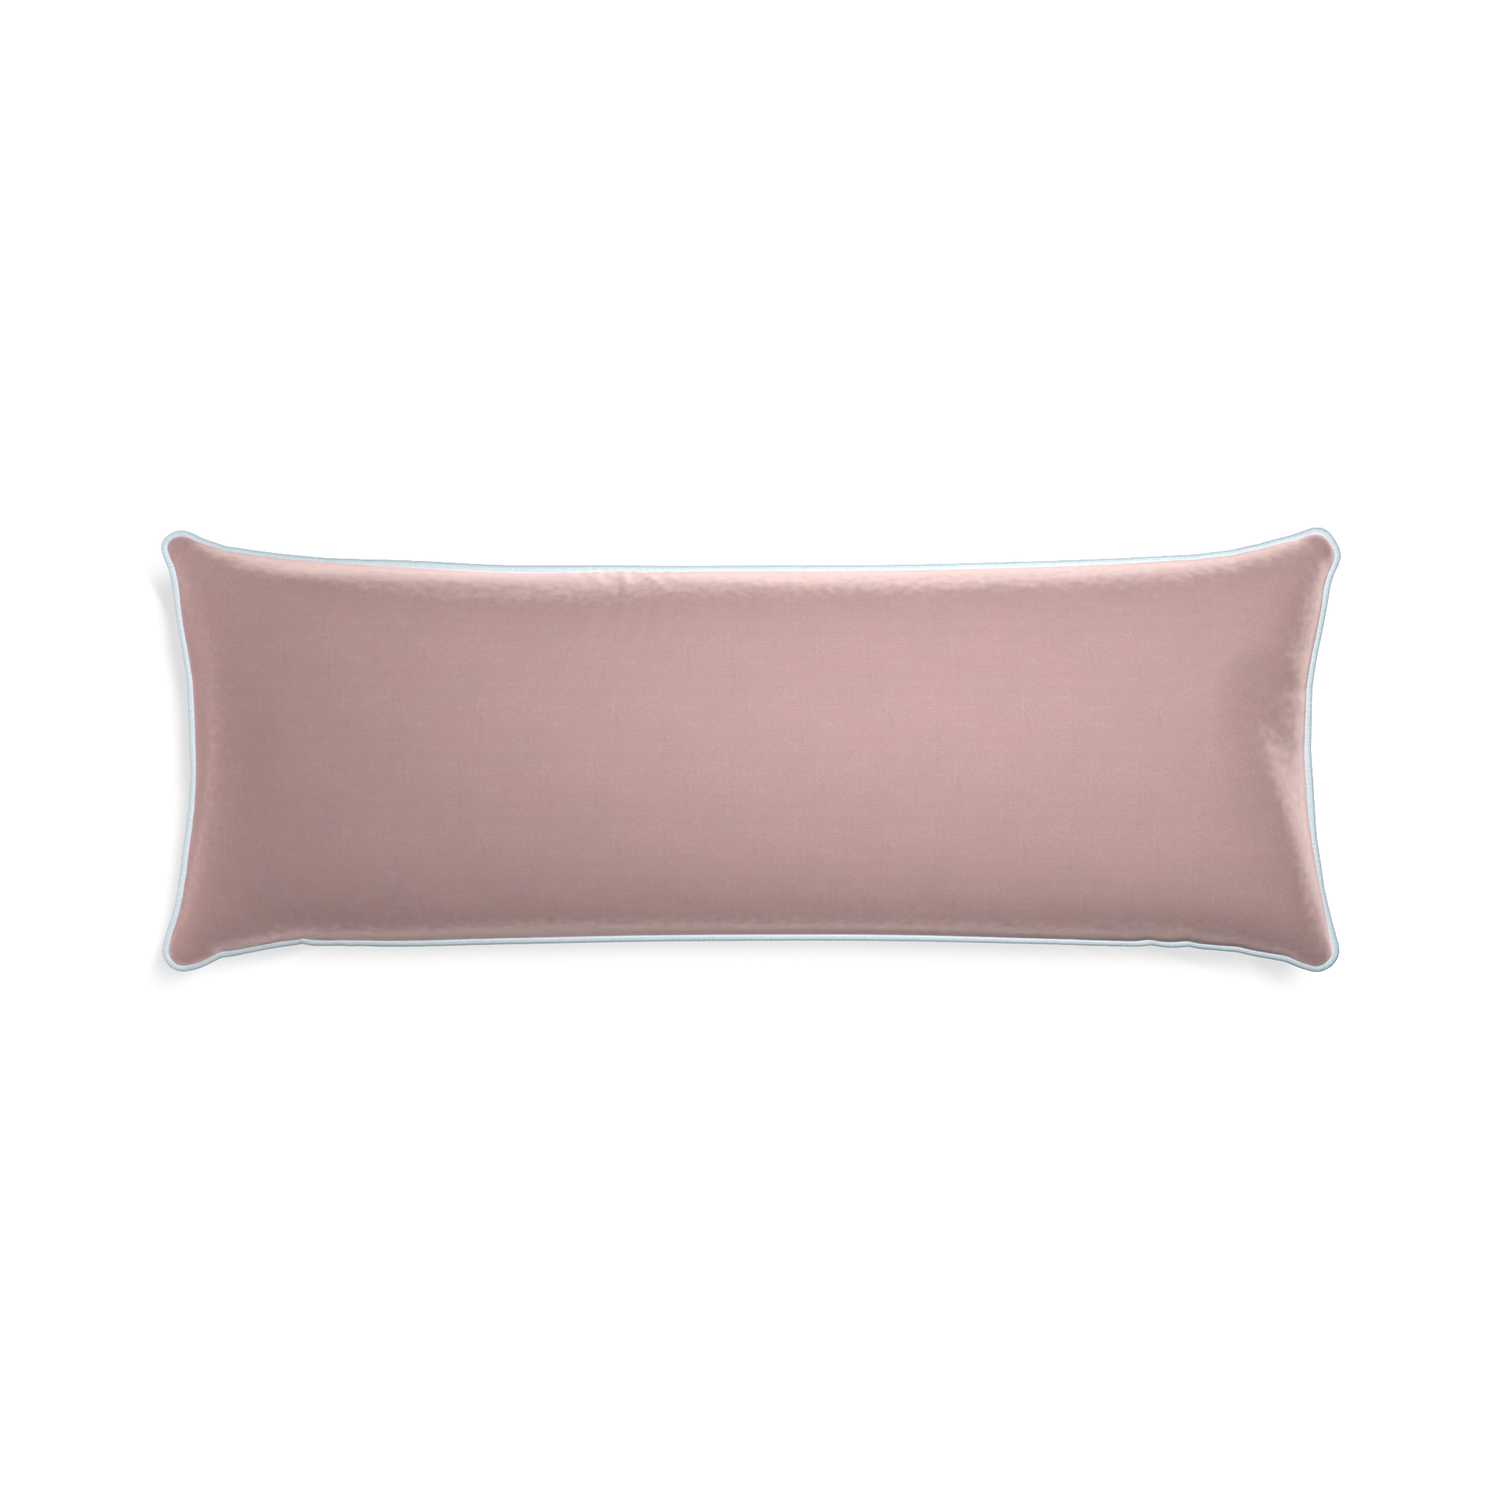 Xl-lumbar mauve velvet custom pillow with powder piping on white background